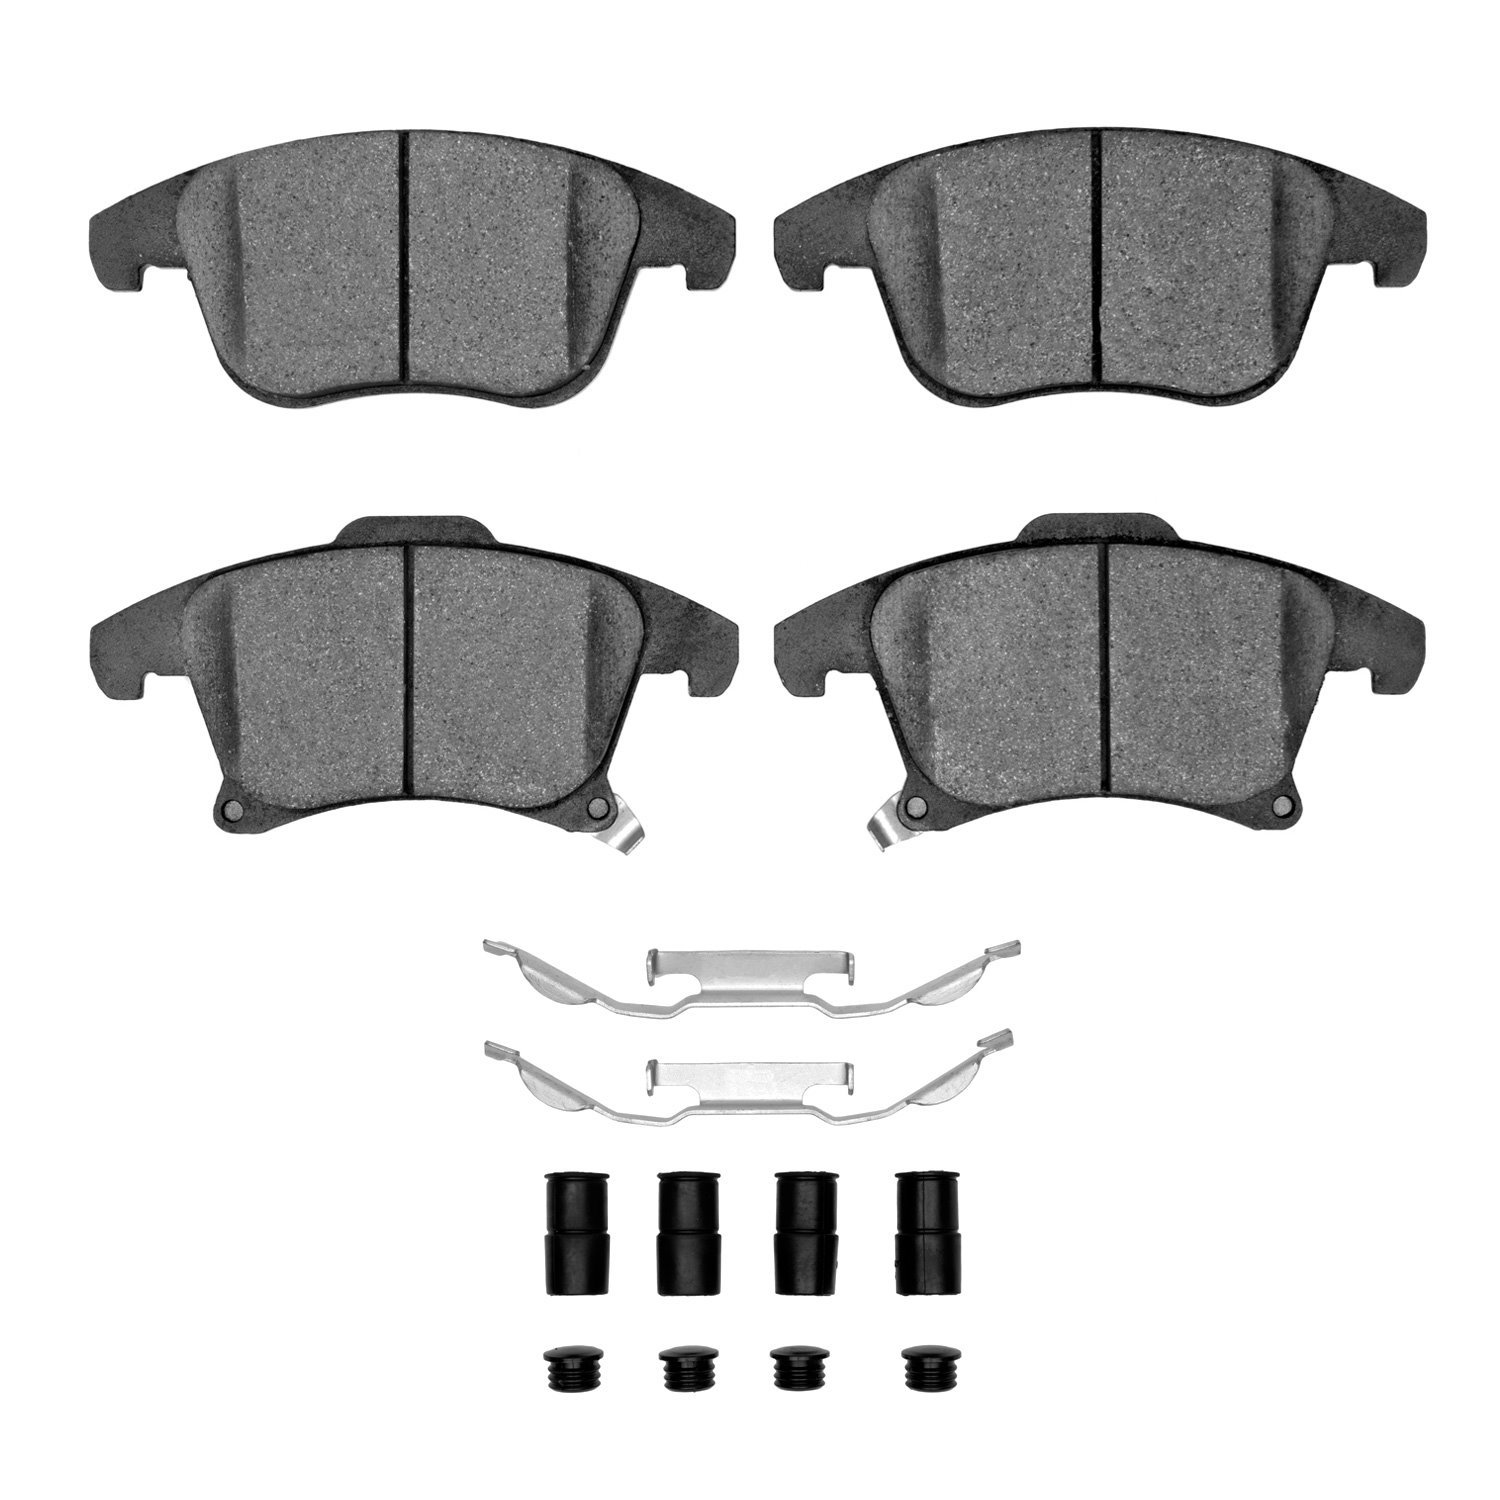 1310-1653-01 3000-Series Ceramic Brake Pads & Hardware Kit, 2013-2020 Ford/Lincoln/Mercury/Mazda, Position: Front